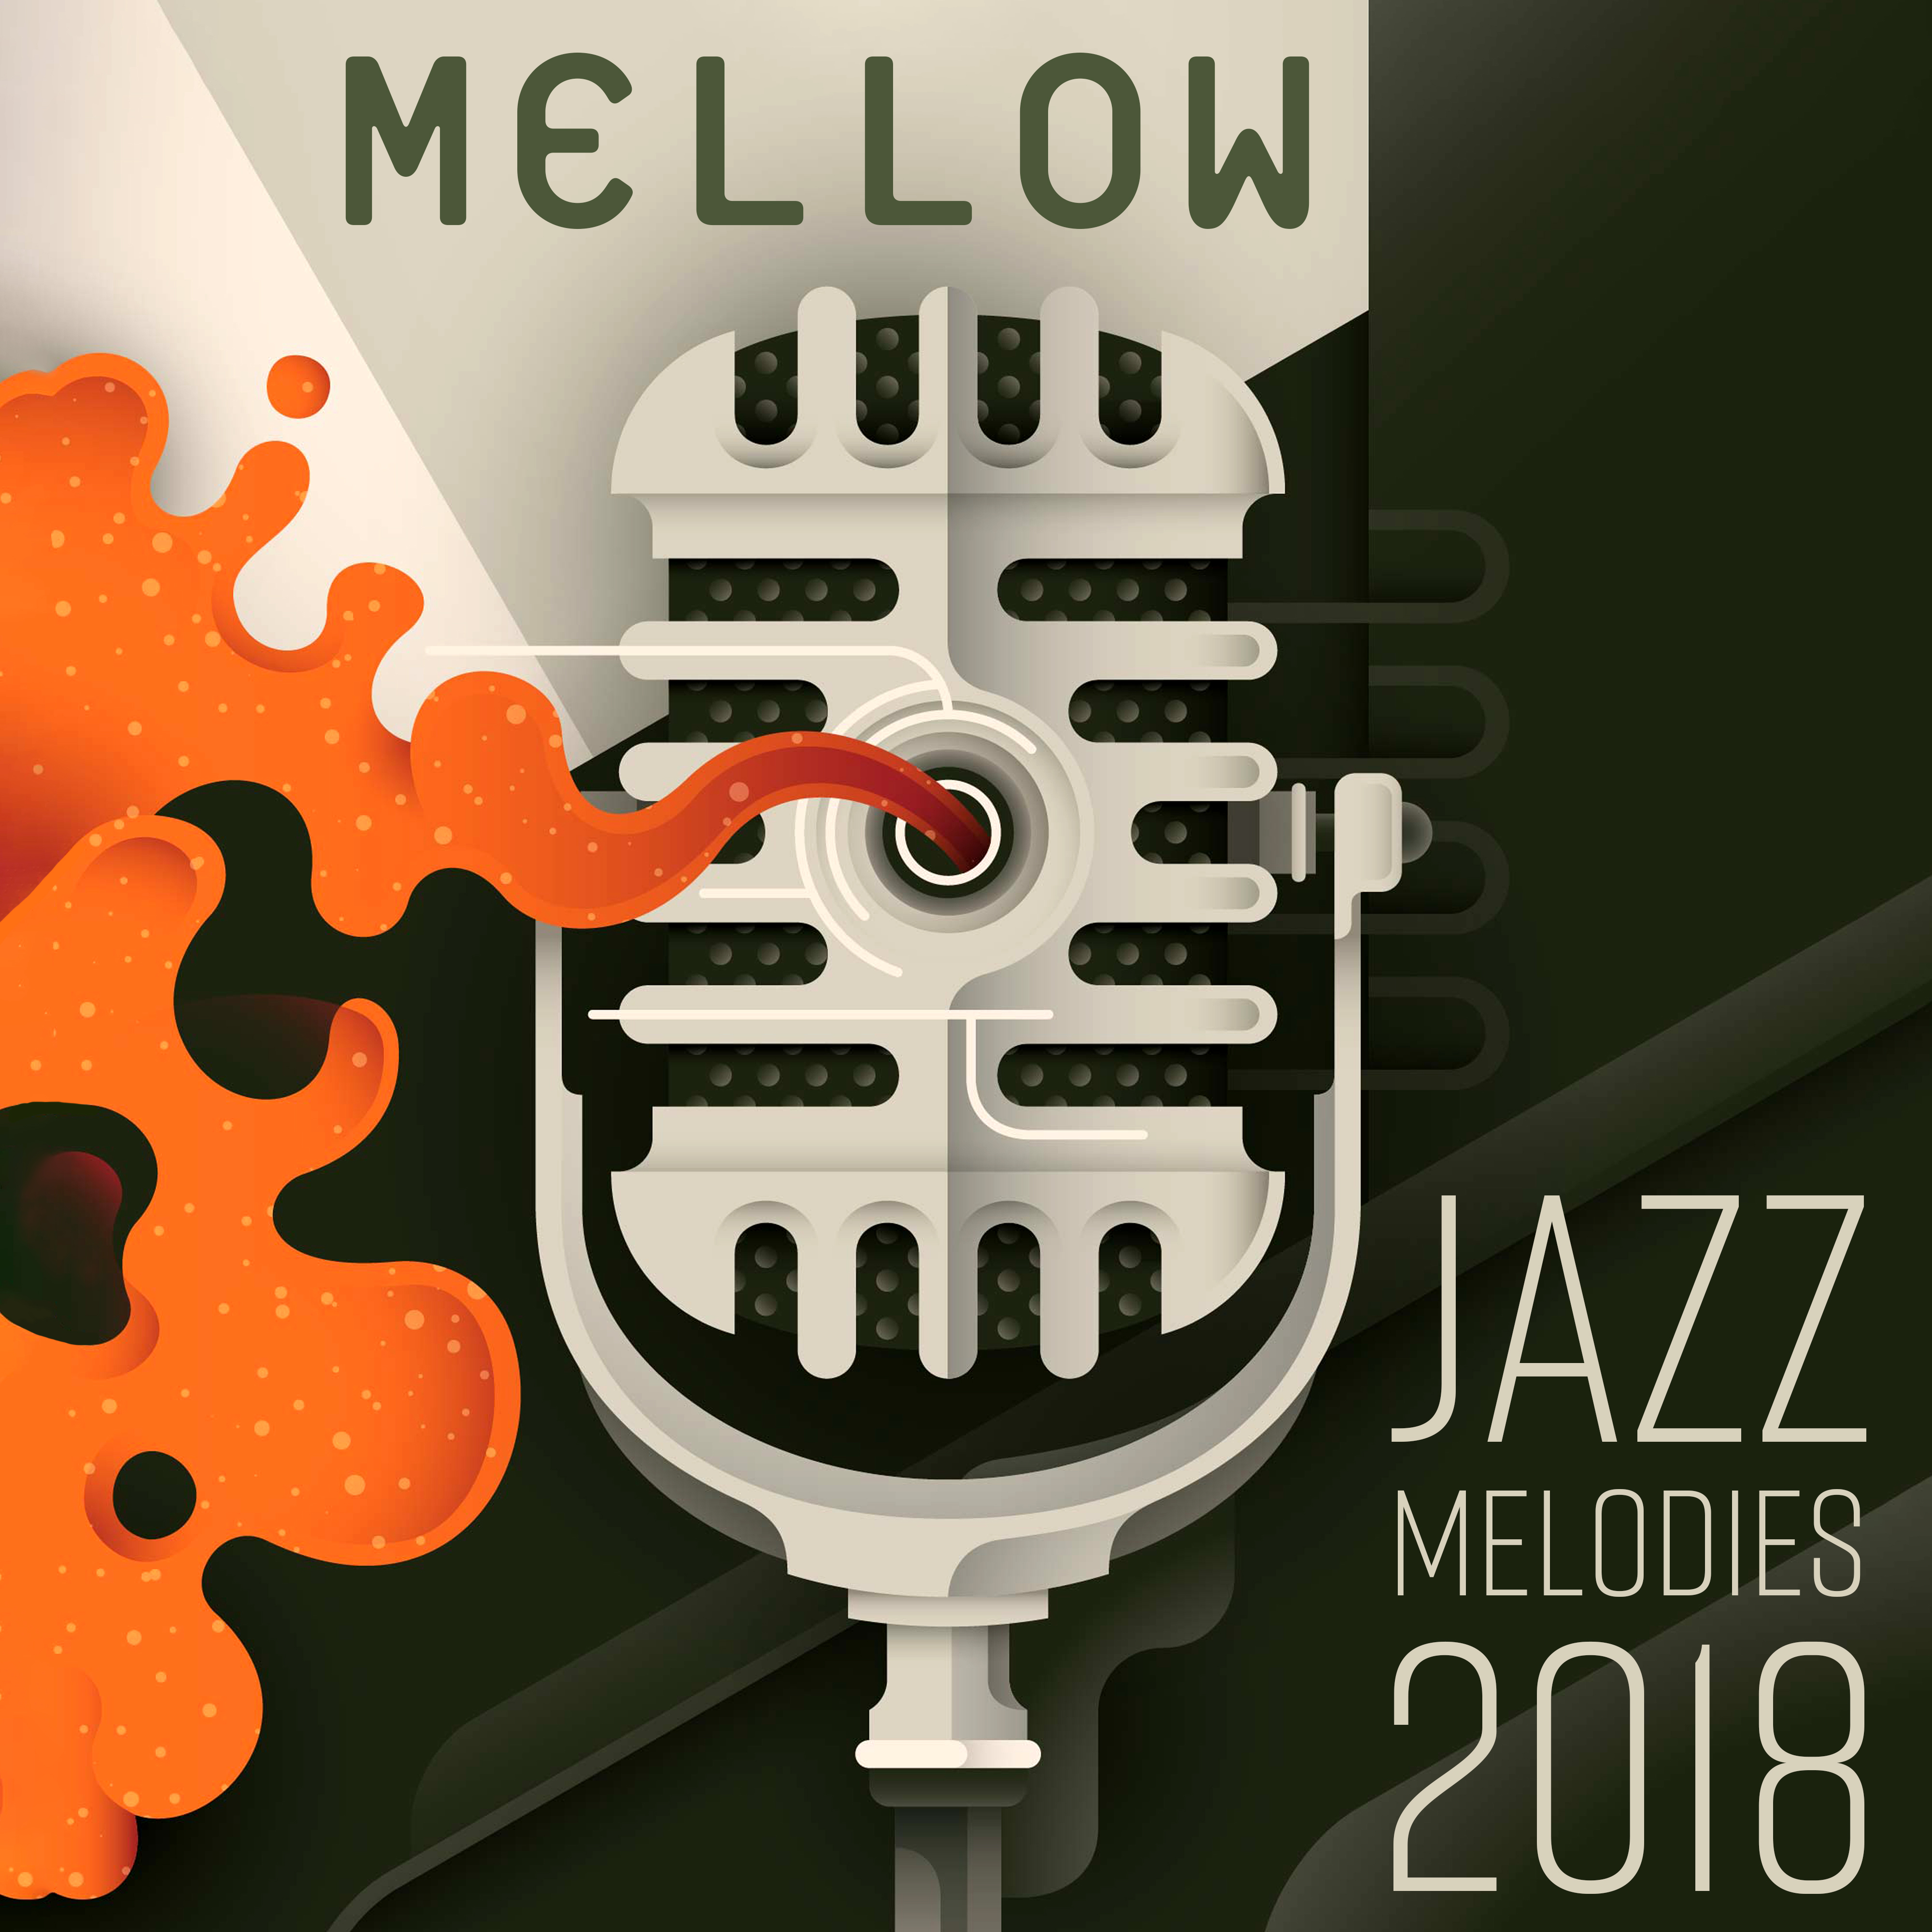 Mellow Jazz Melodies 2018